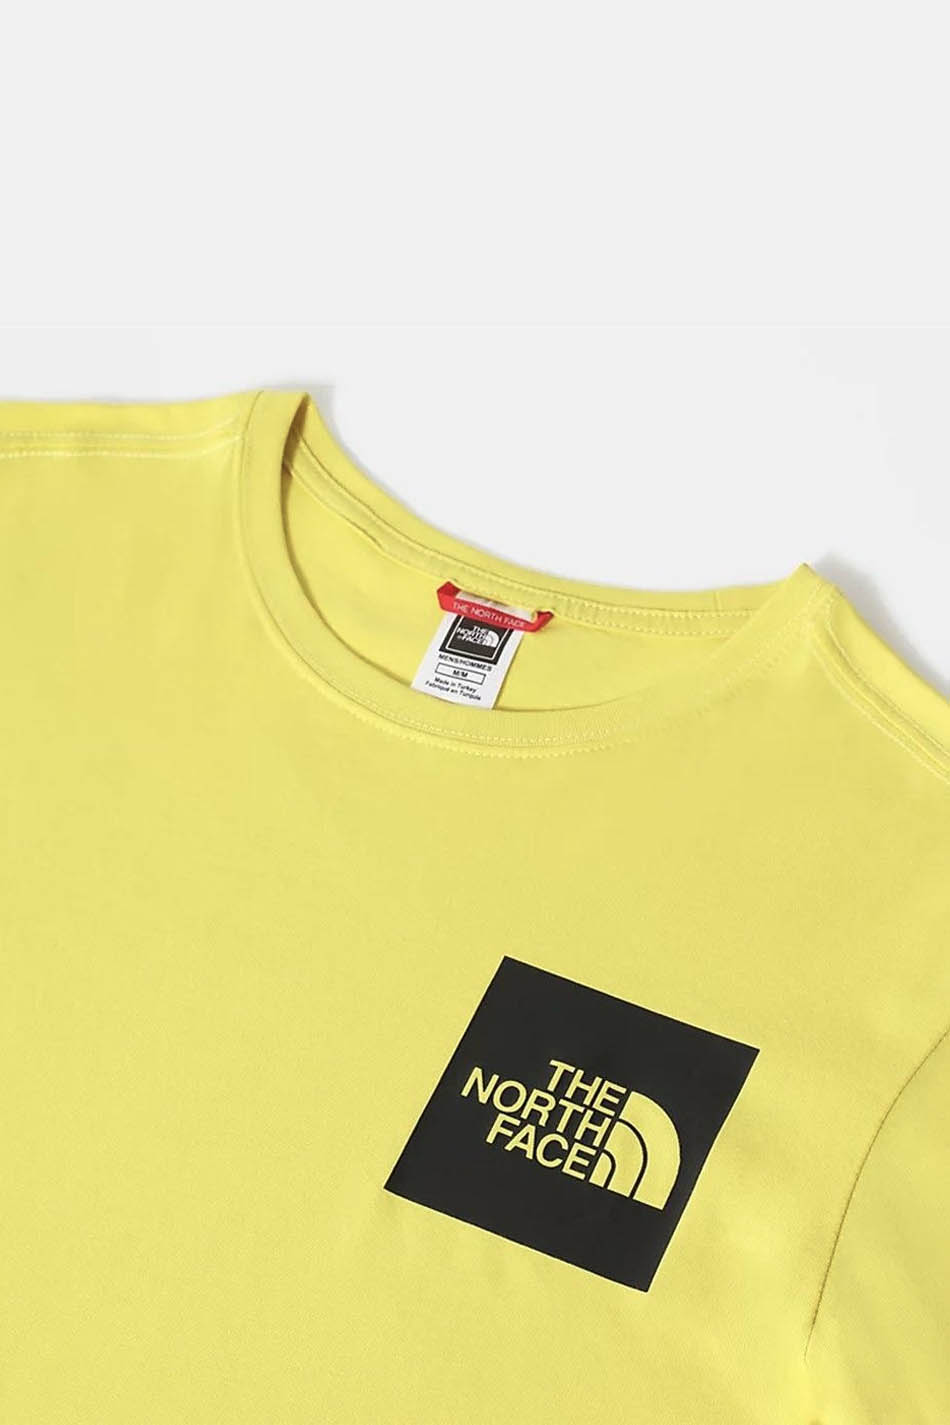 North Face Fine Gelbes T-Shirt